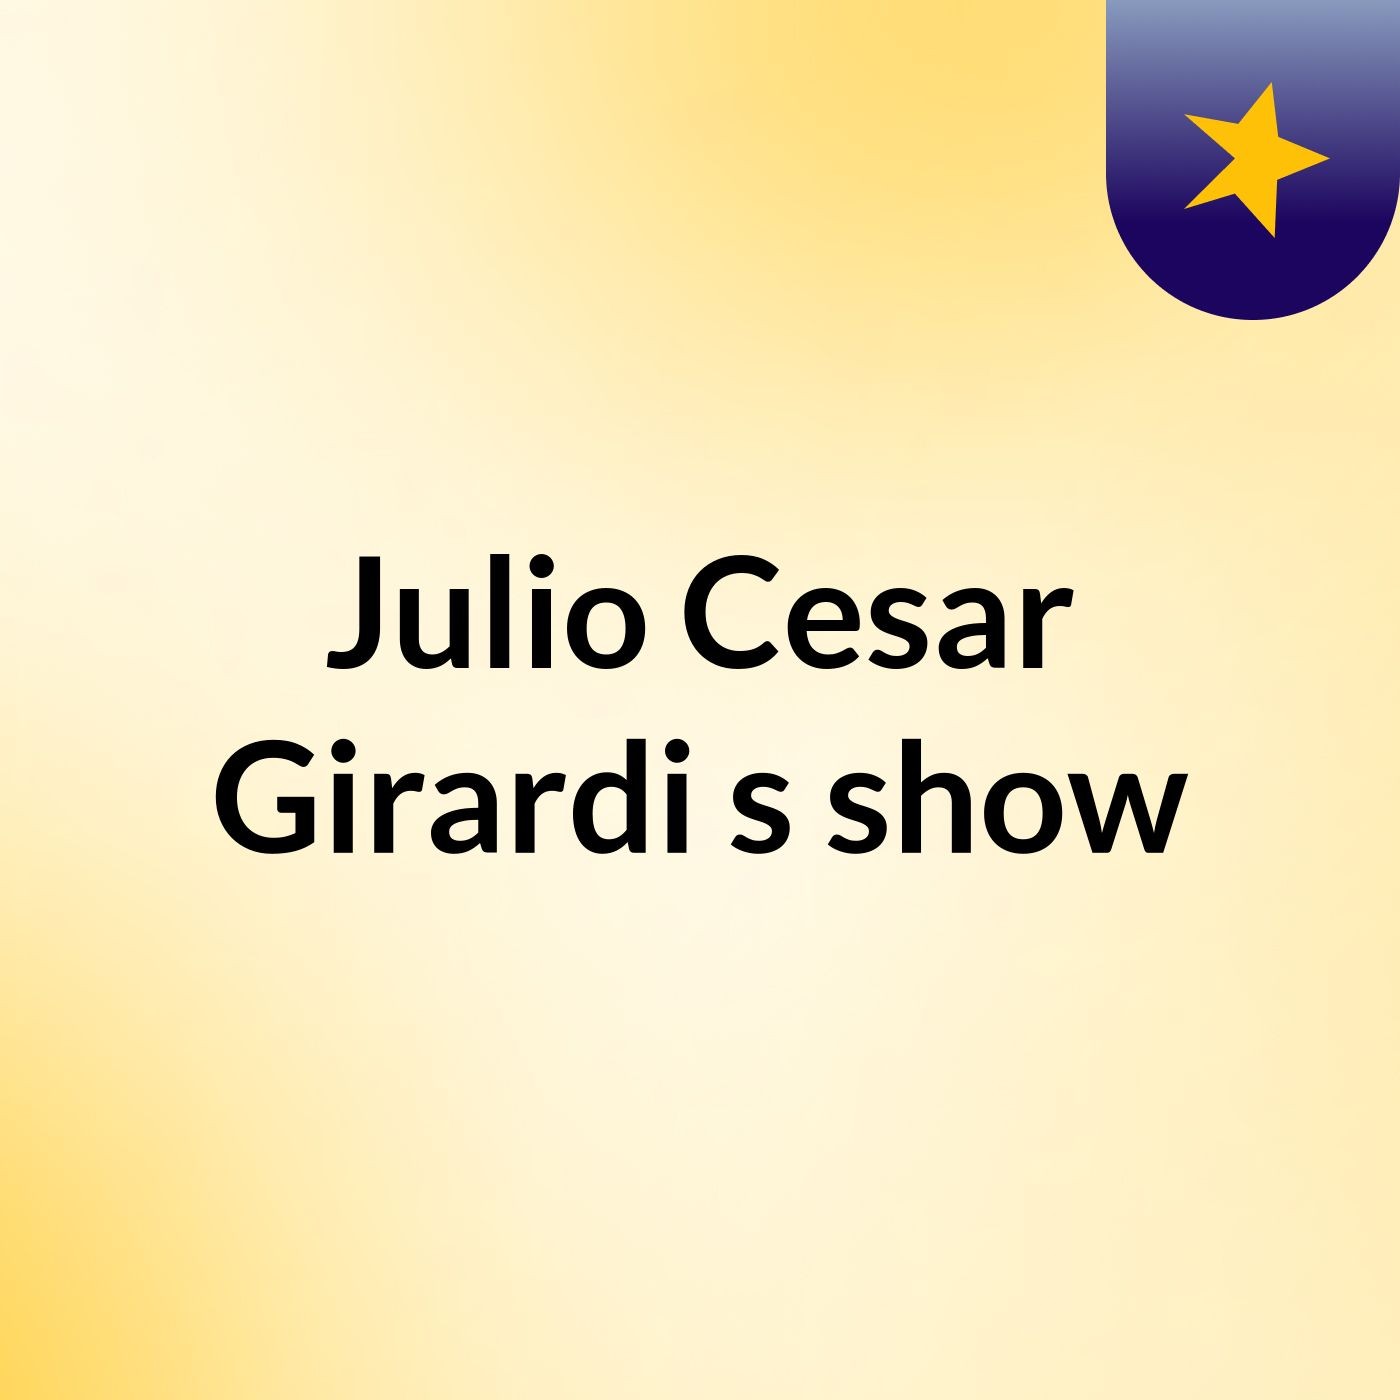 Julio Cesar Girardi's show